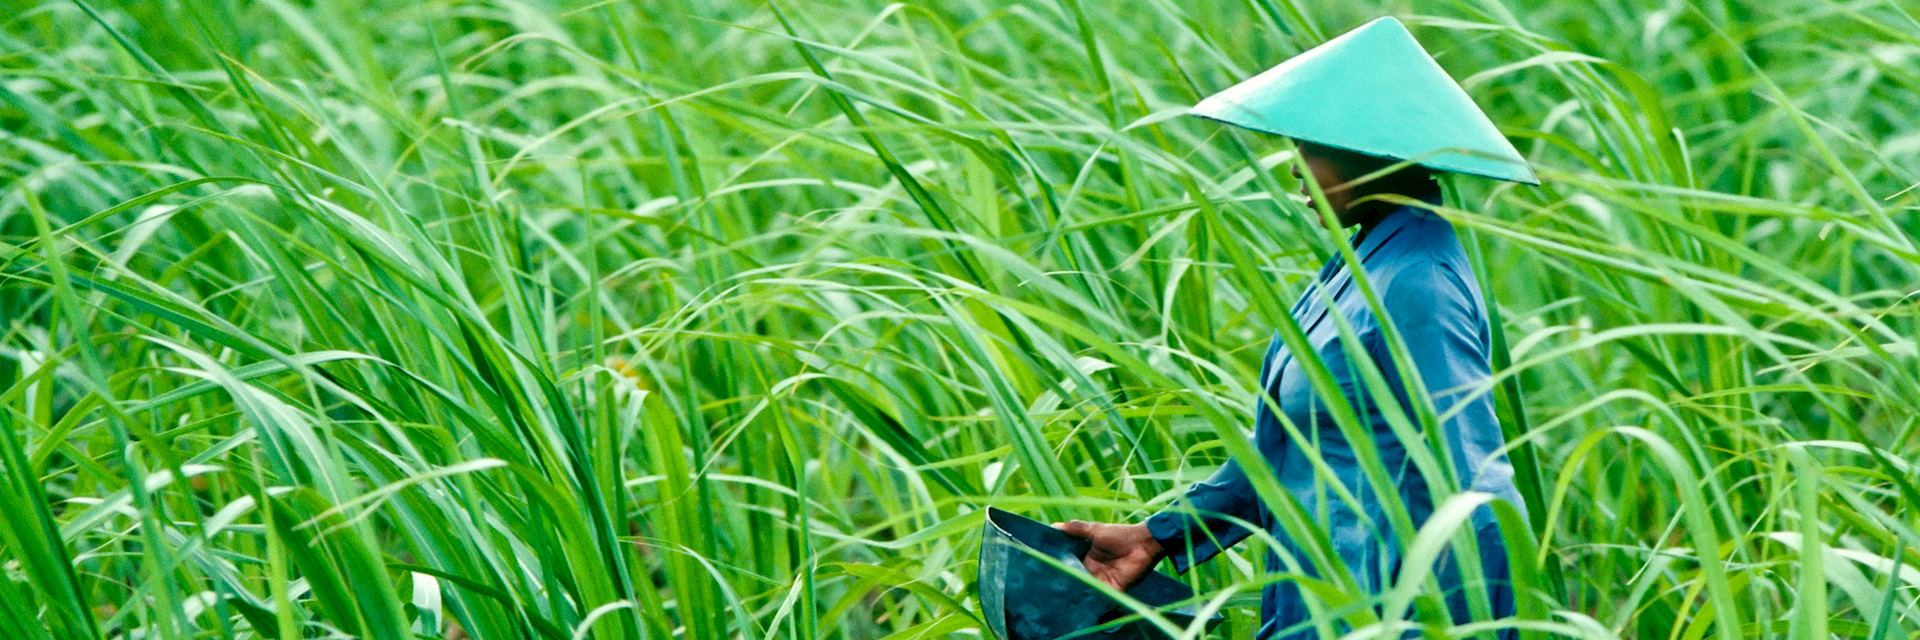 Fertilising a rice field in Vietnam